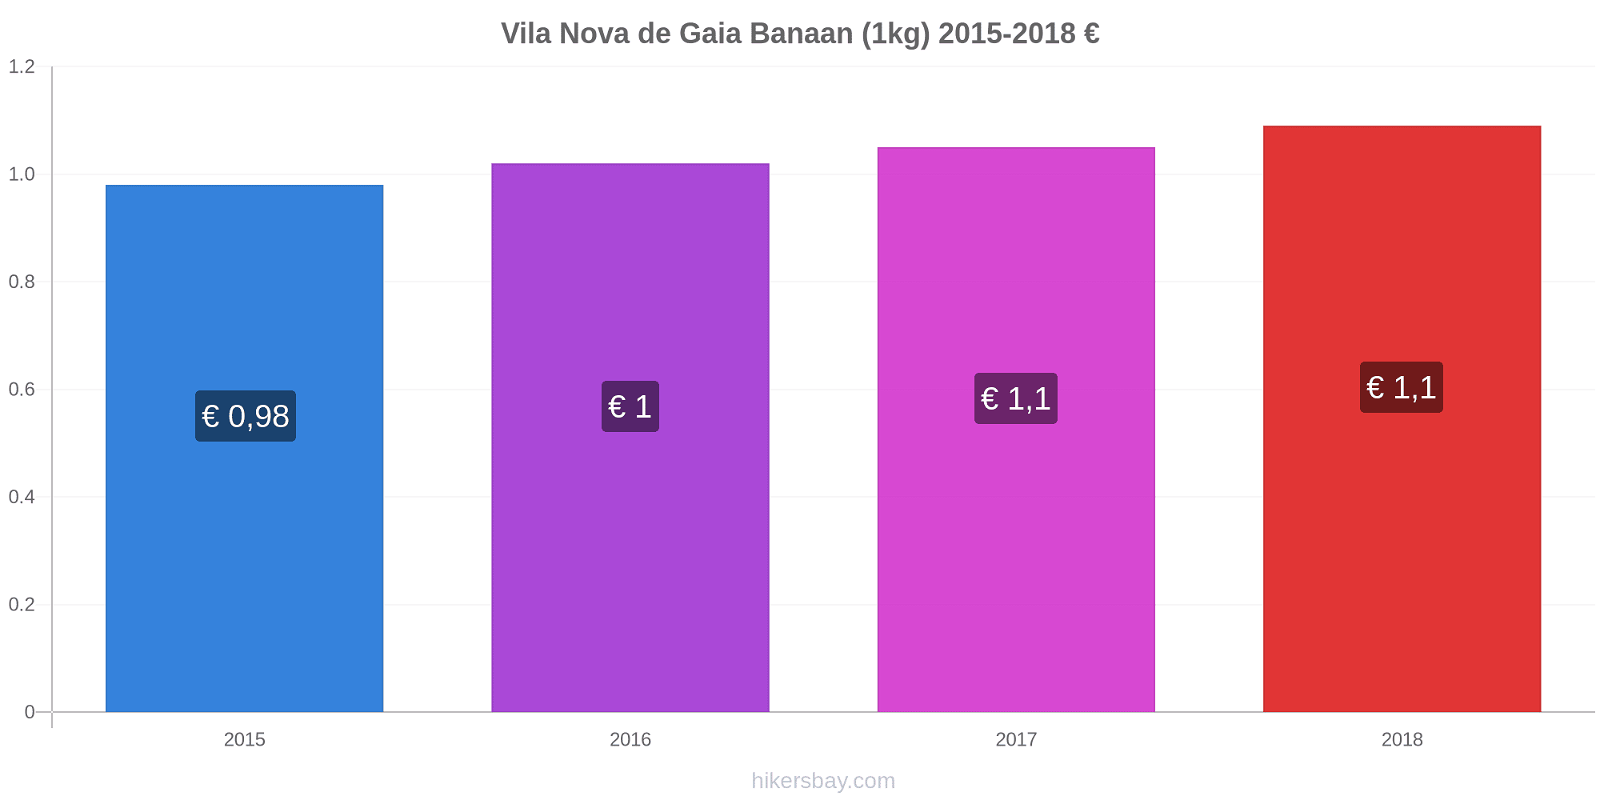 Vila Nova de Gaia prijswijzigingen Banaan (1kg) hikersbay.com